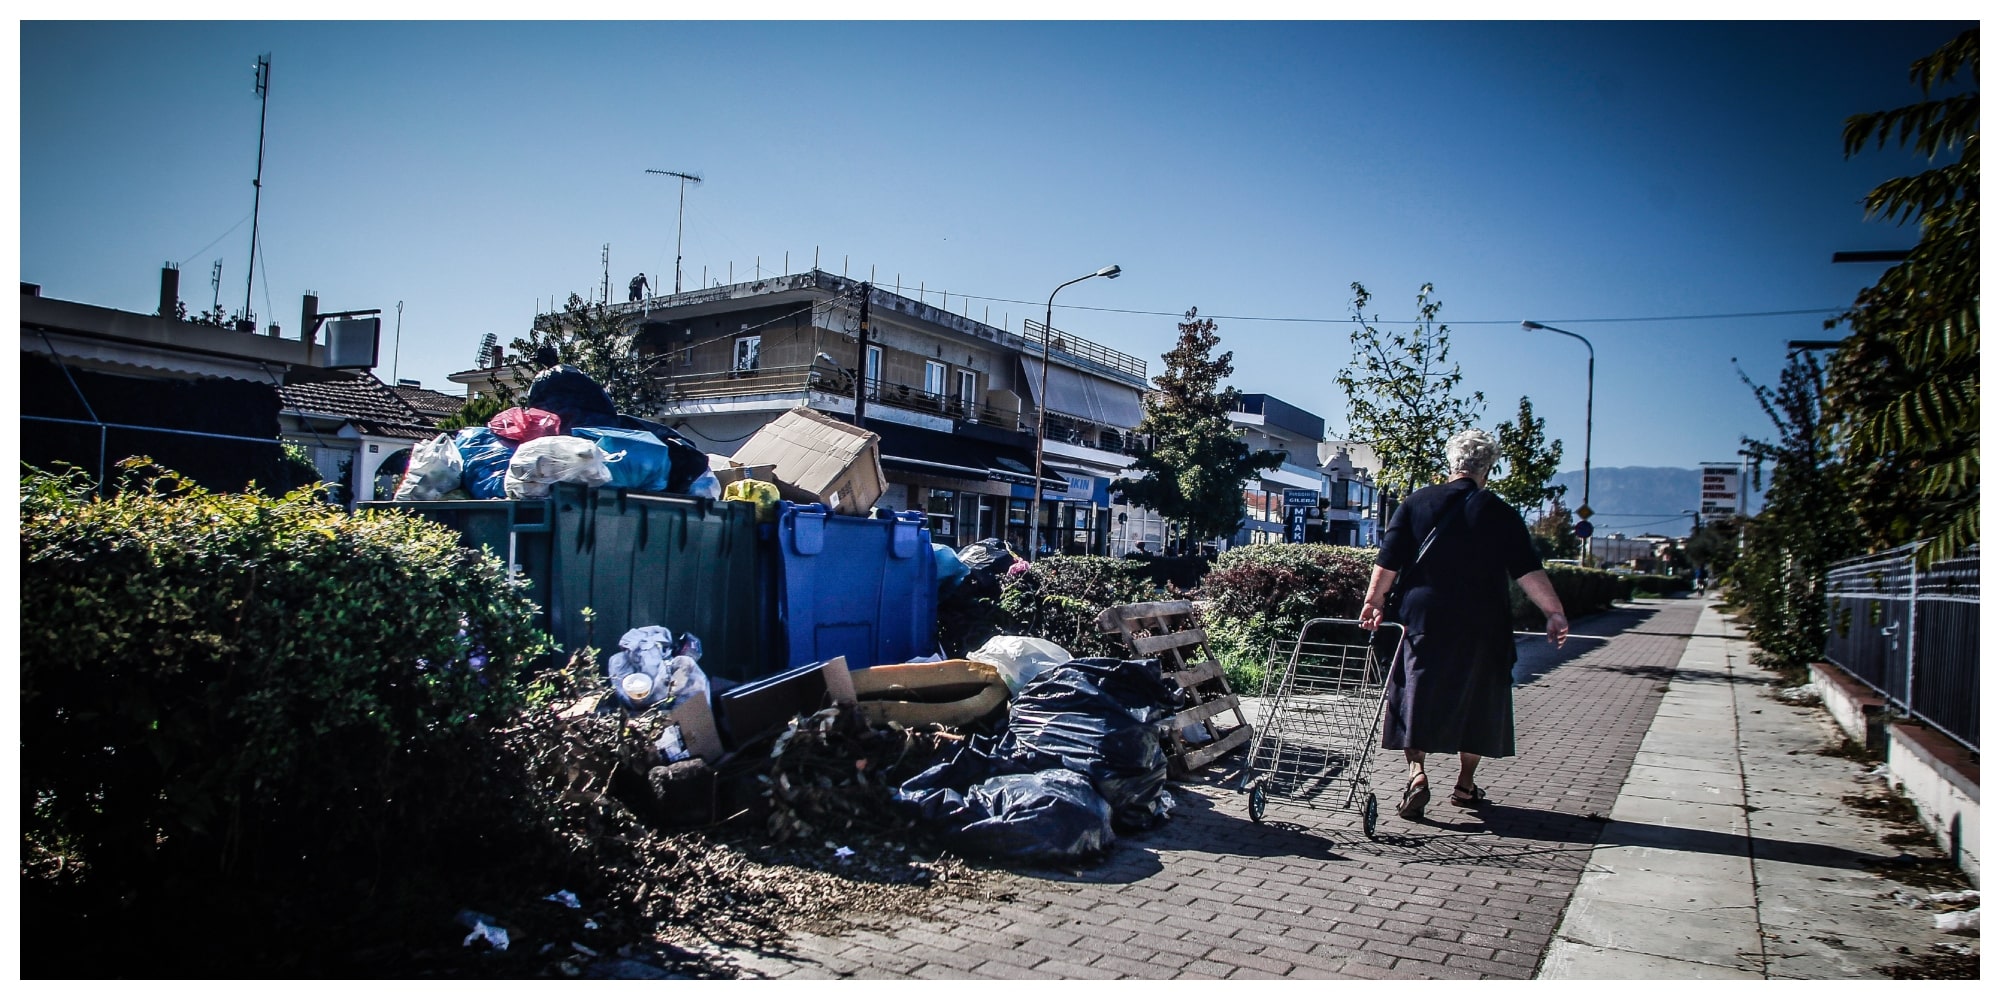 thnos skoupidia 4 6 - «Πνίγηκε» στα σκουπίδια η Τήνος – Μήνυση κατέθεσε ο δήμαρχος